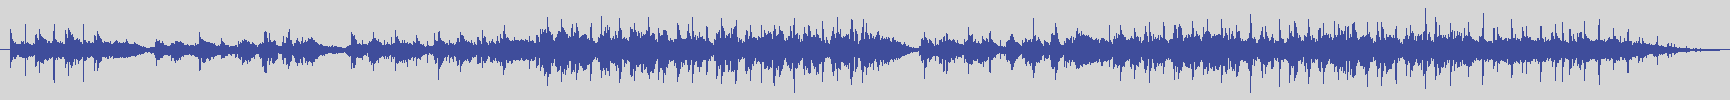 digiphonic_records [DPR004] Nino D'Angelo - Vecchio Comò [Original Mix] audio wave form